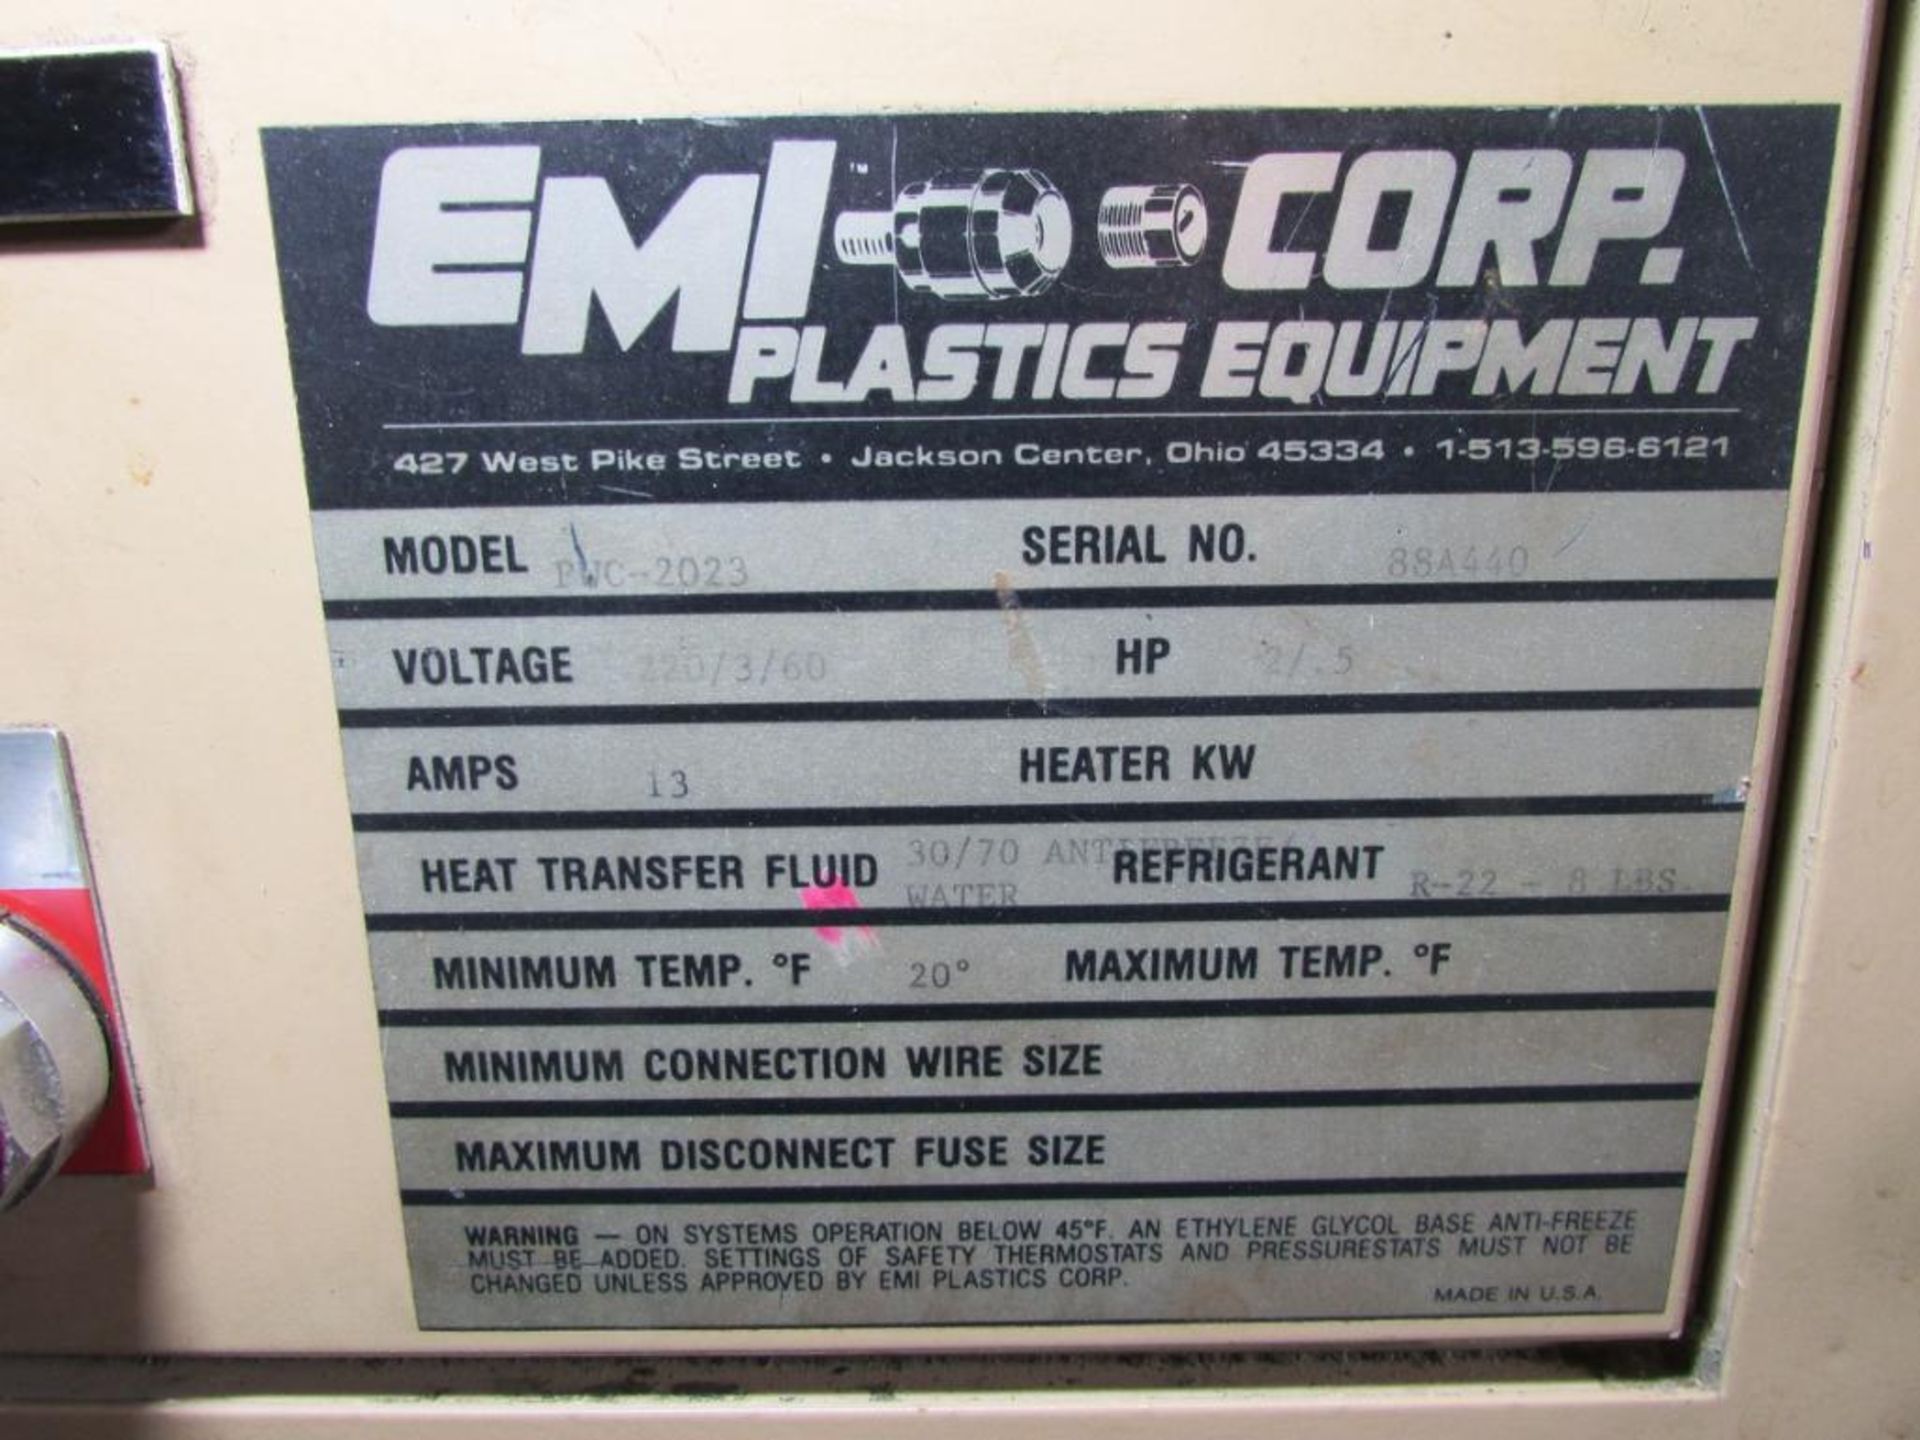 Emi Corp. Plastics Equipment PWC-2023 Chiller - Image 6 of 6